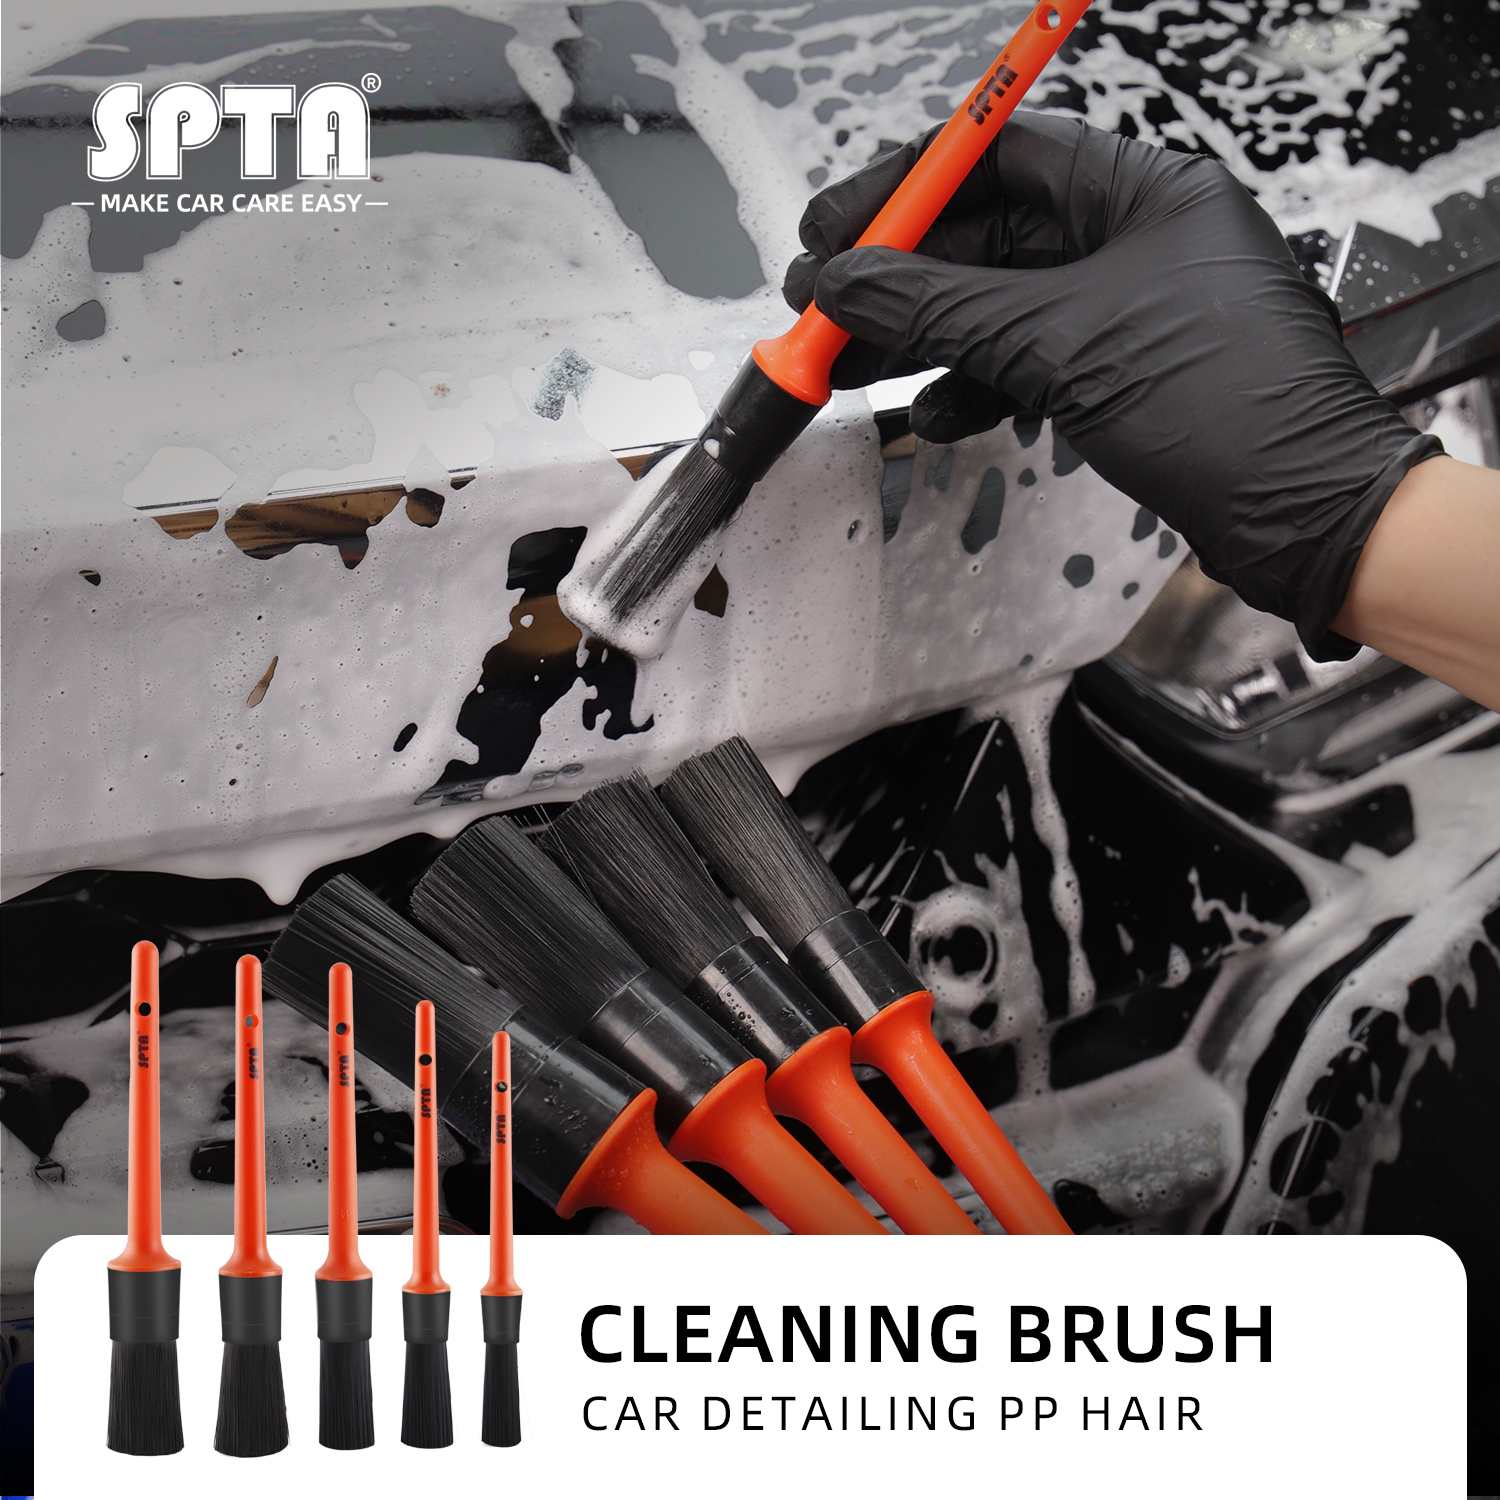 SPTA Car Rim Brush Car Wheel Brush Set 2pcs Microfiber Brushes